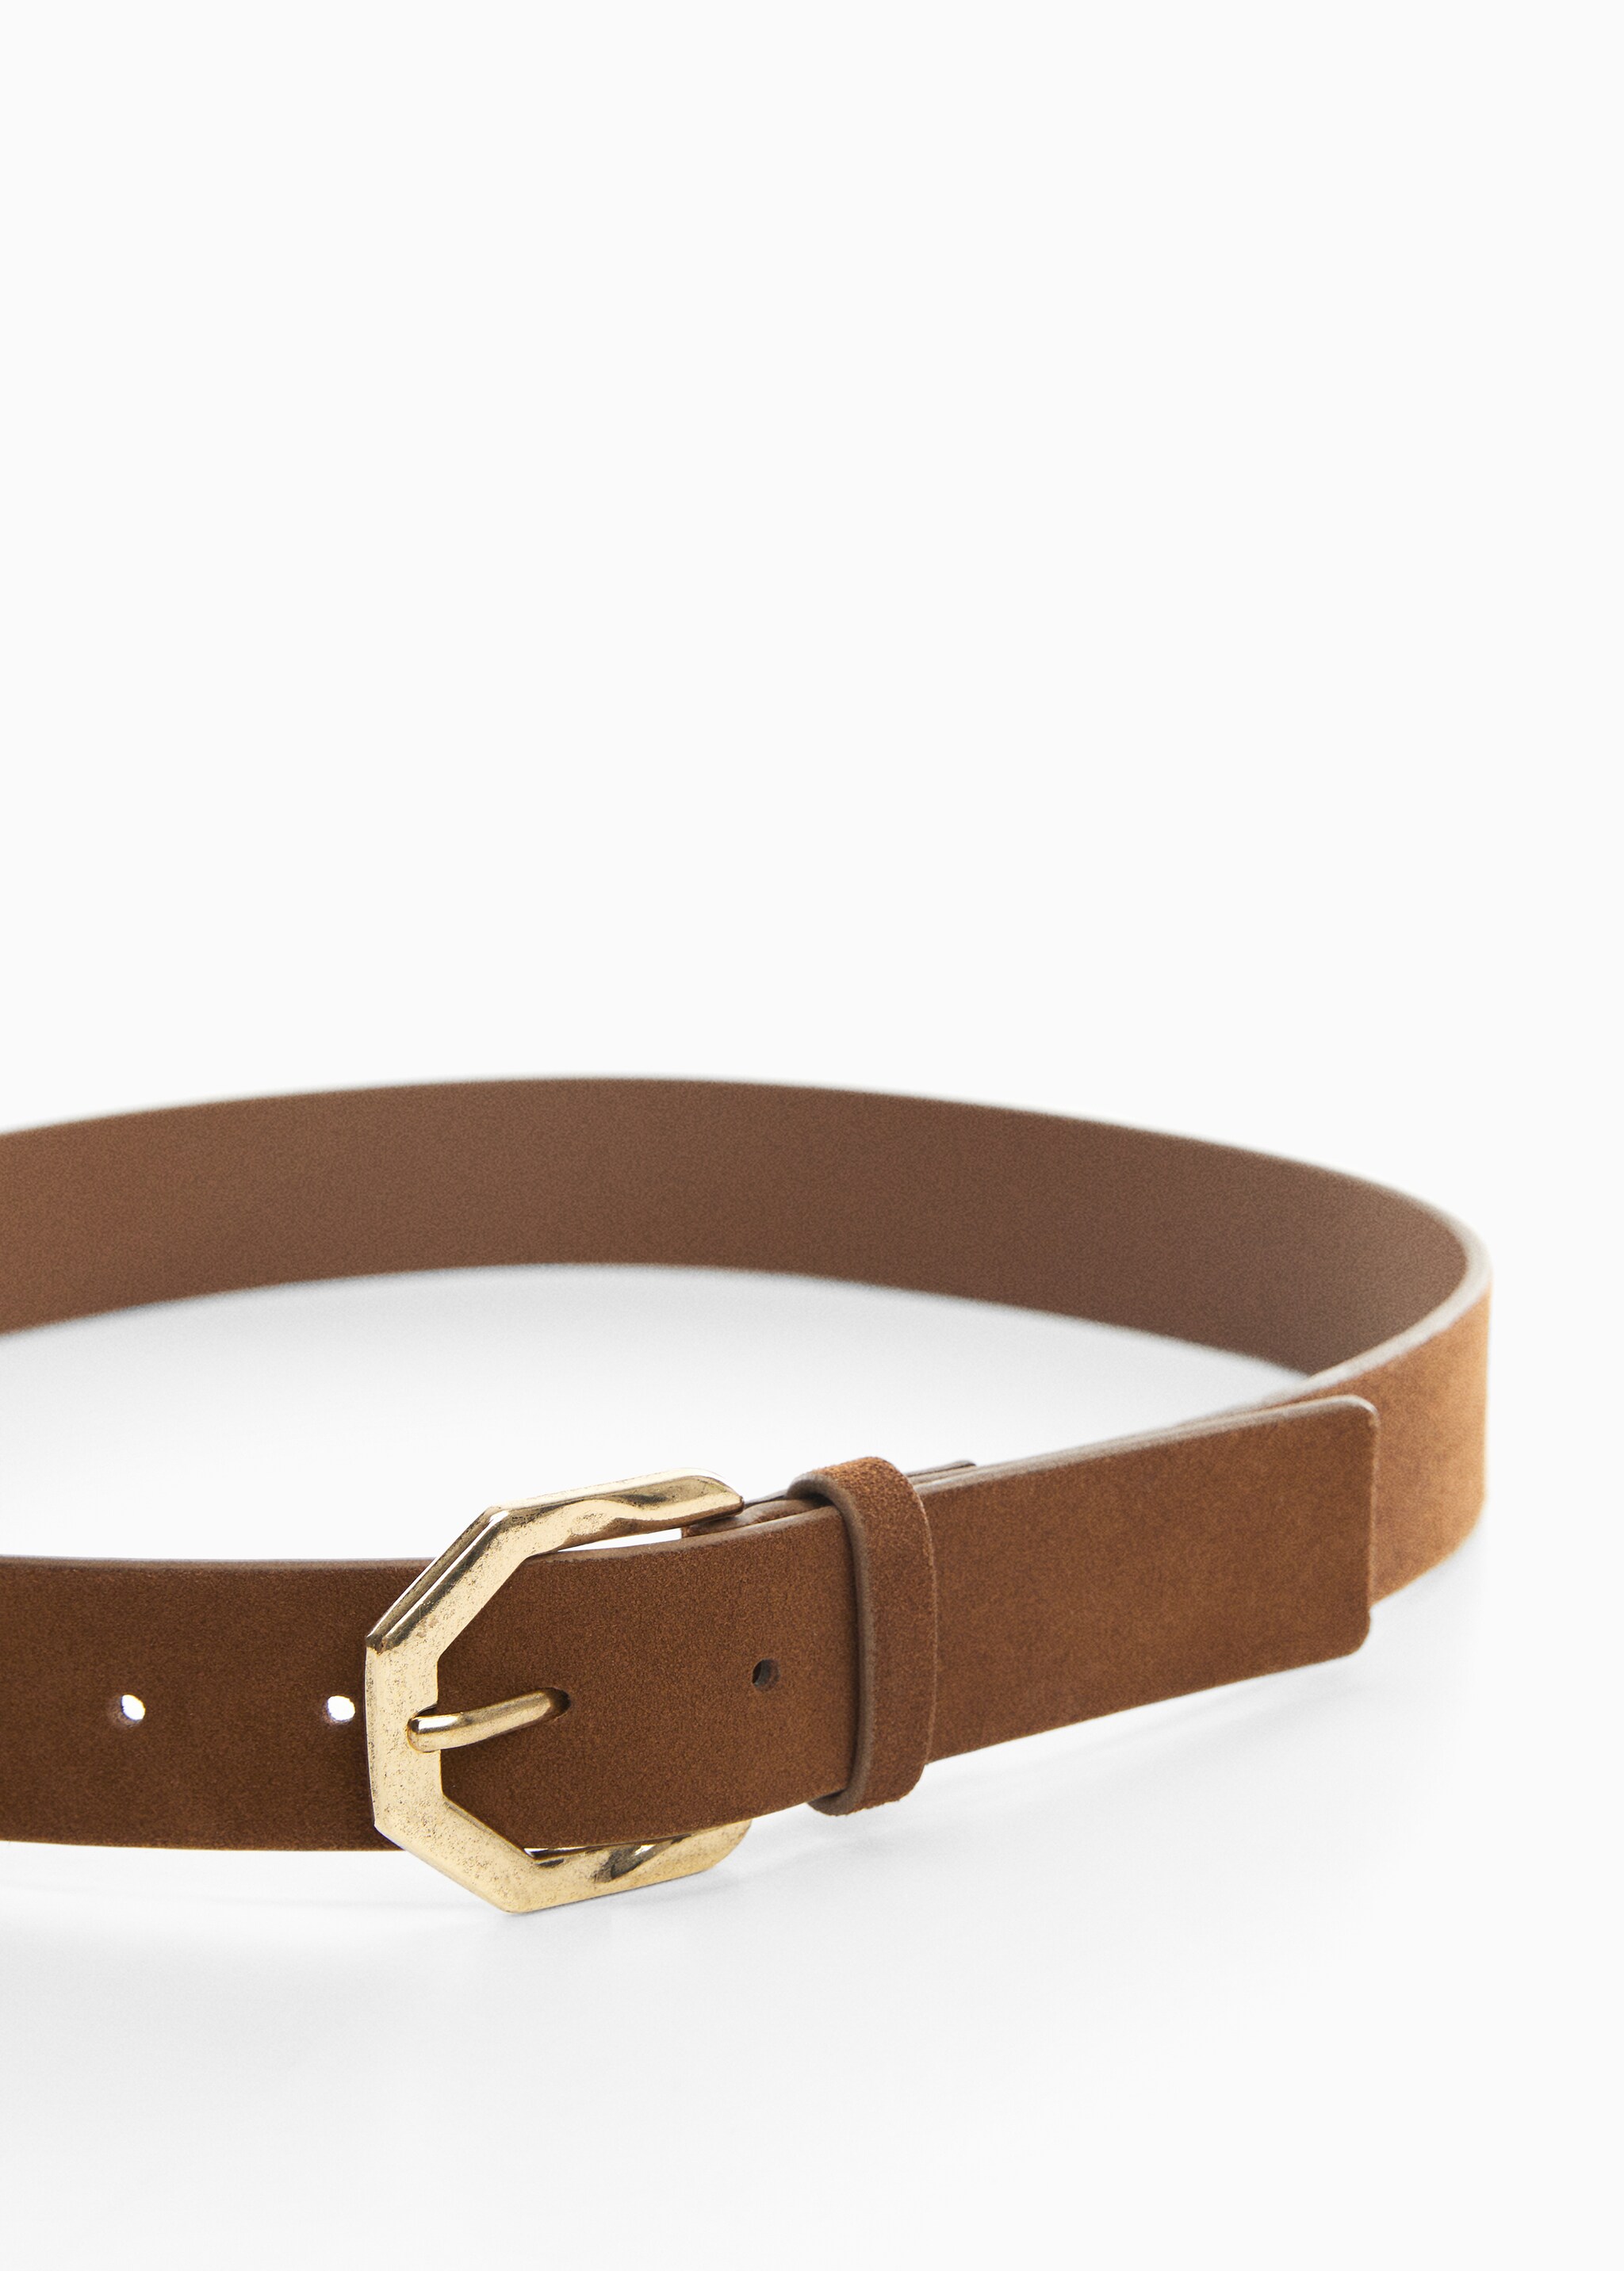 Irregular buckle leather belt - Details of the article 1